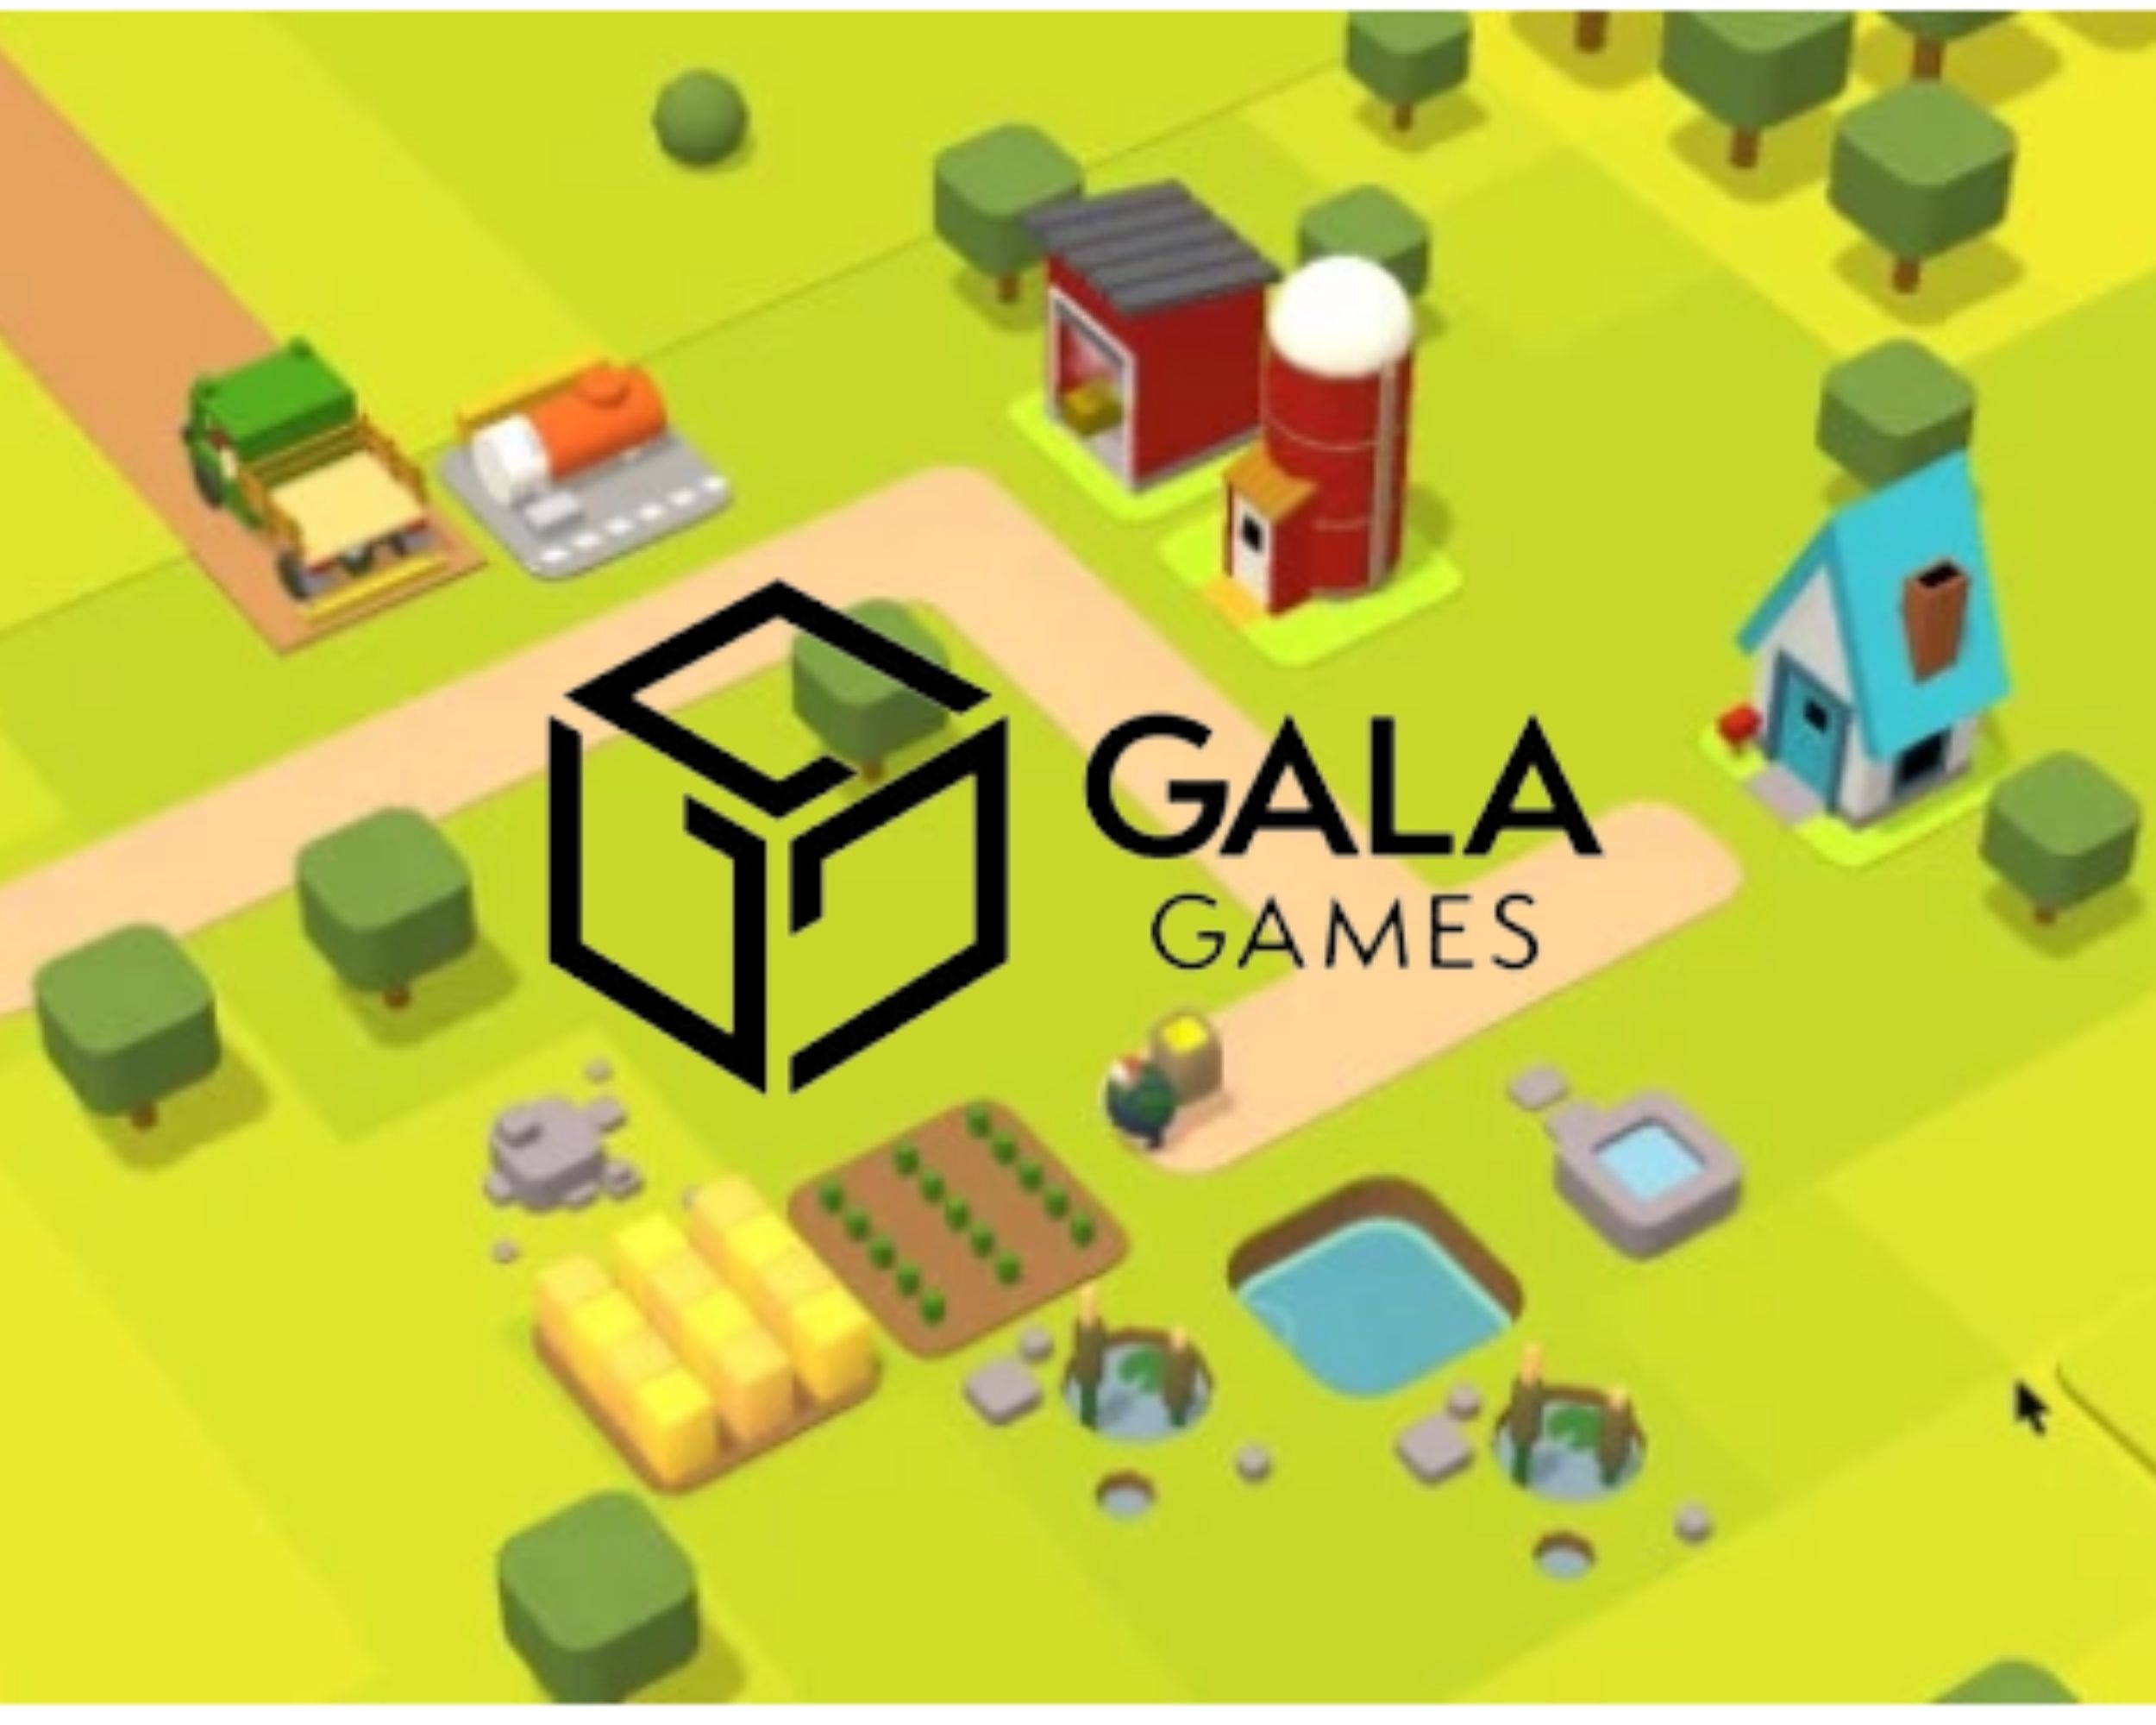 gala games log in